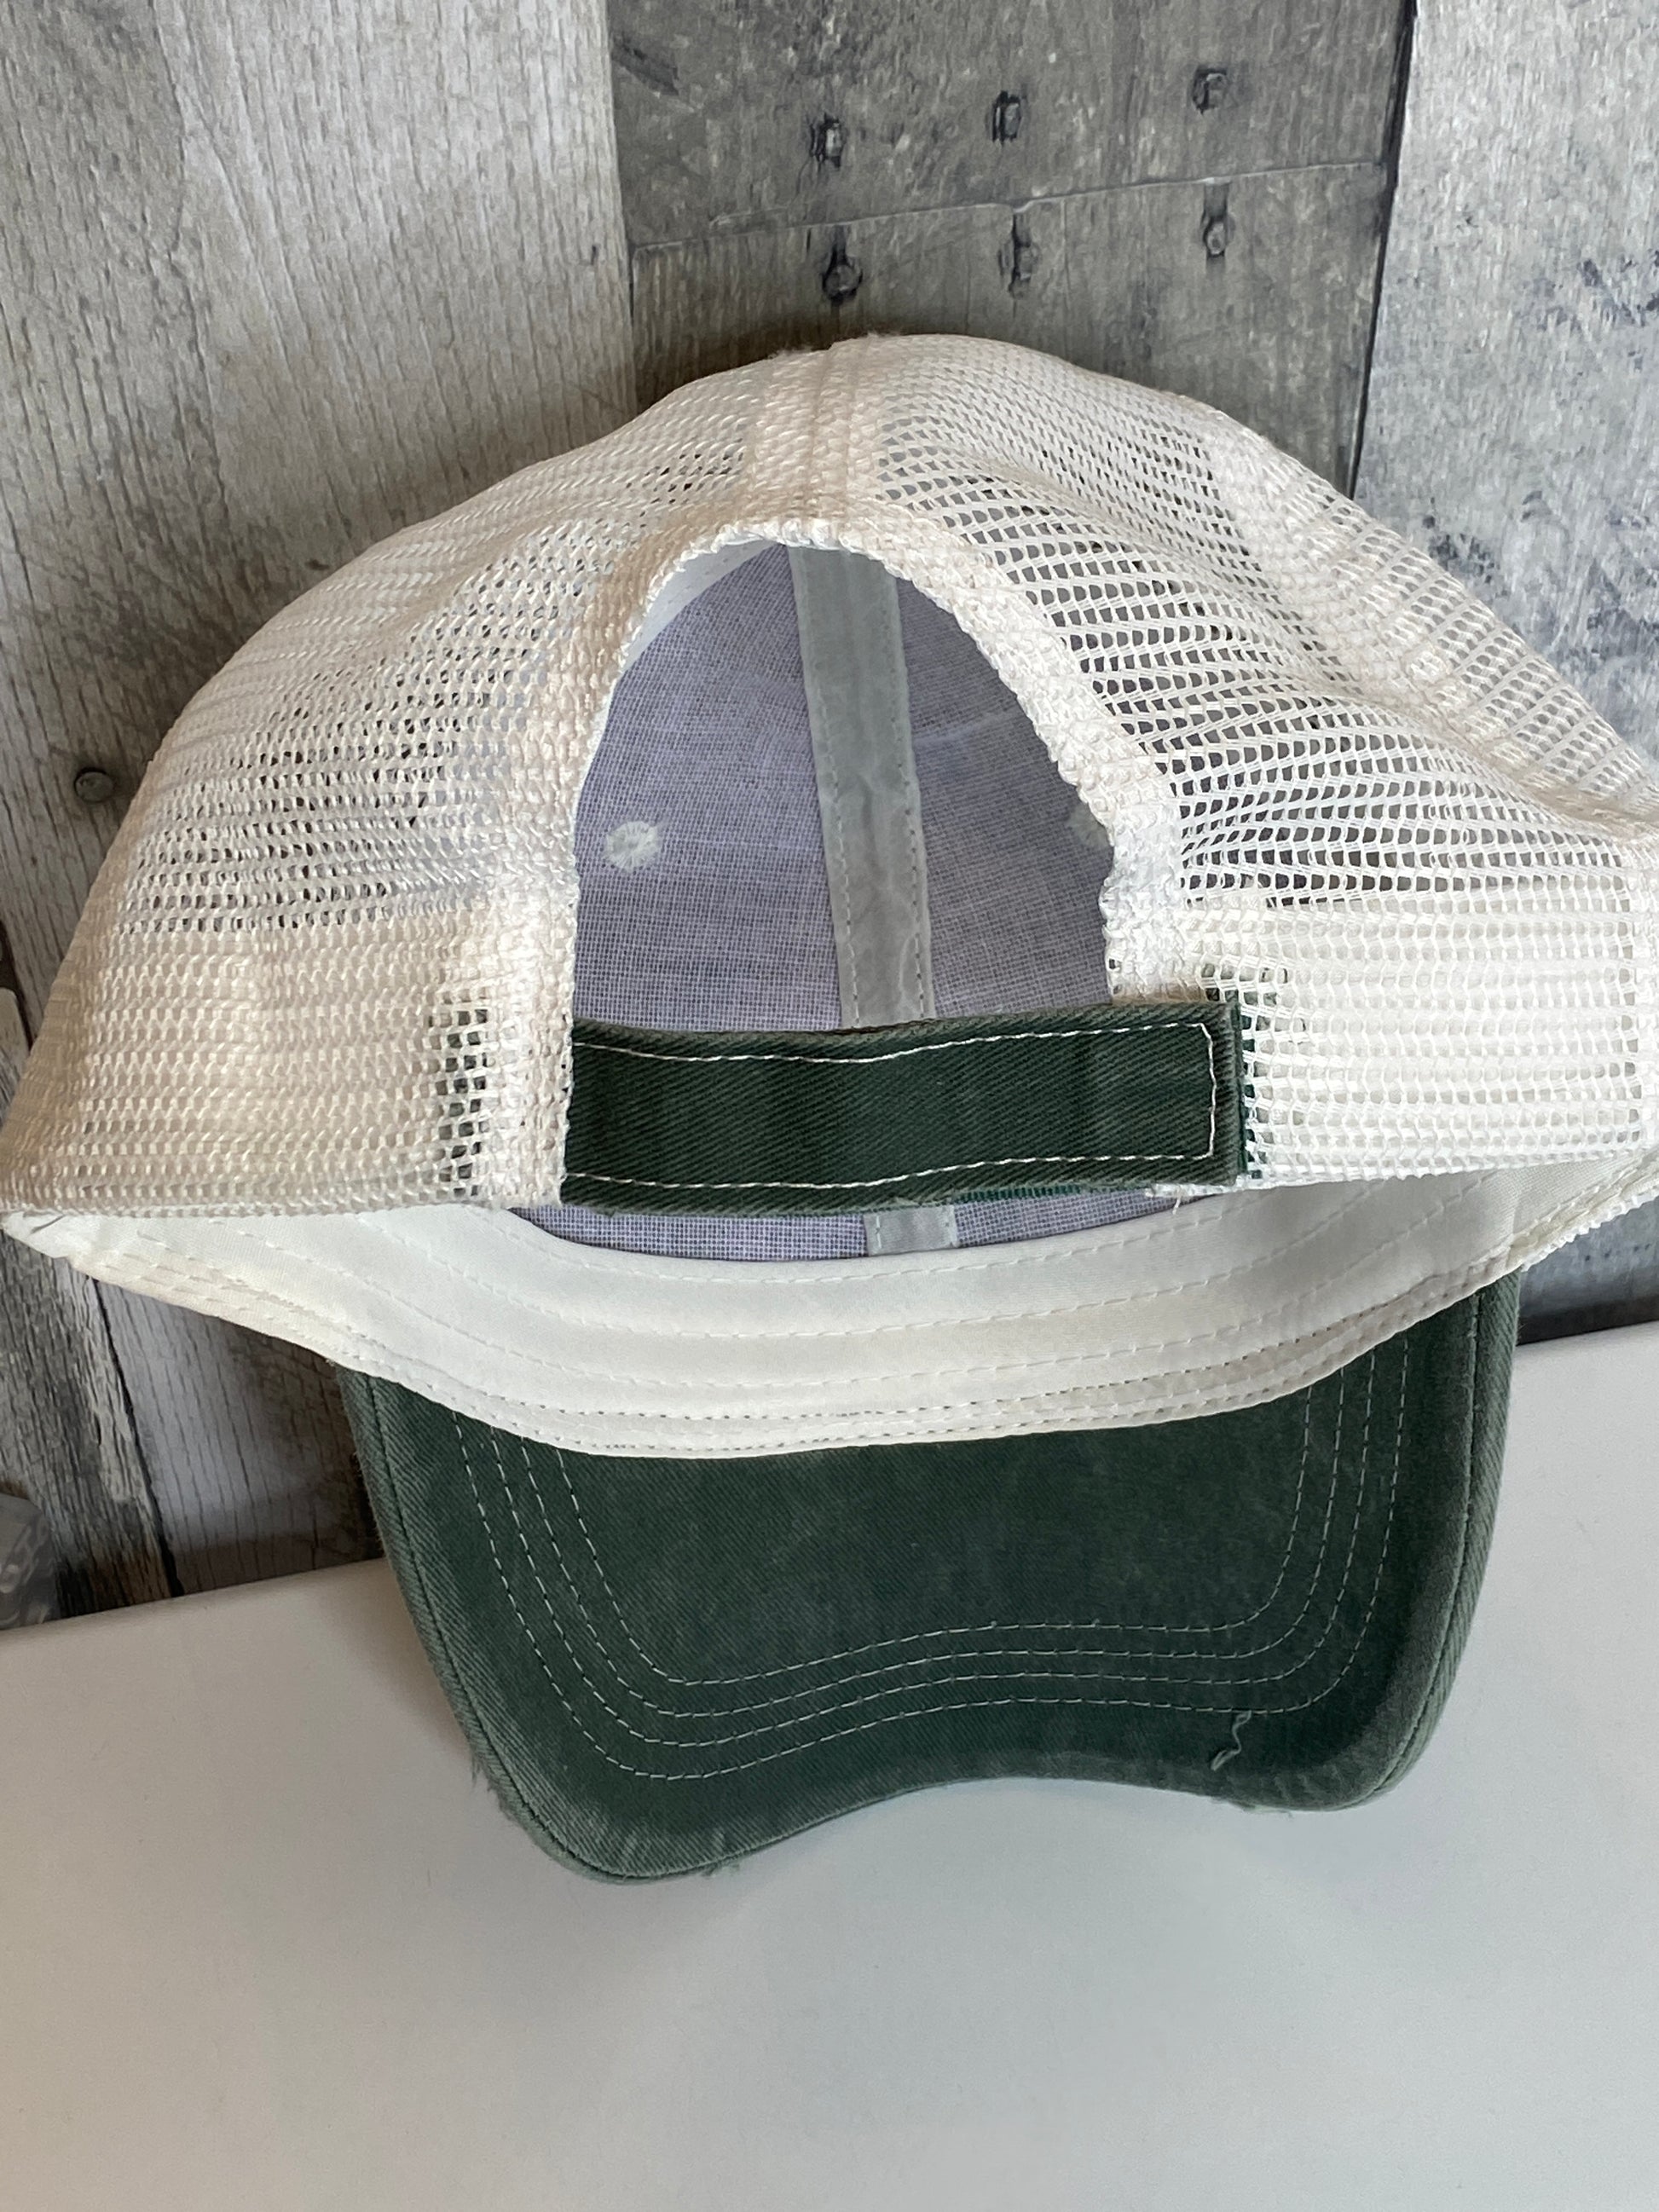 Hollis NH Apple Hat Oval Patch - Binnie & Bopper Designs